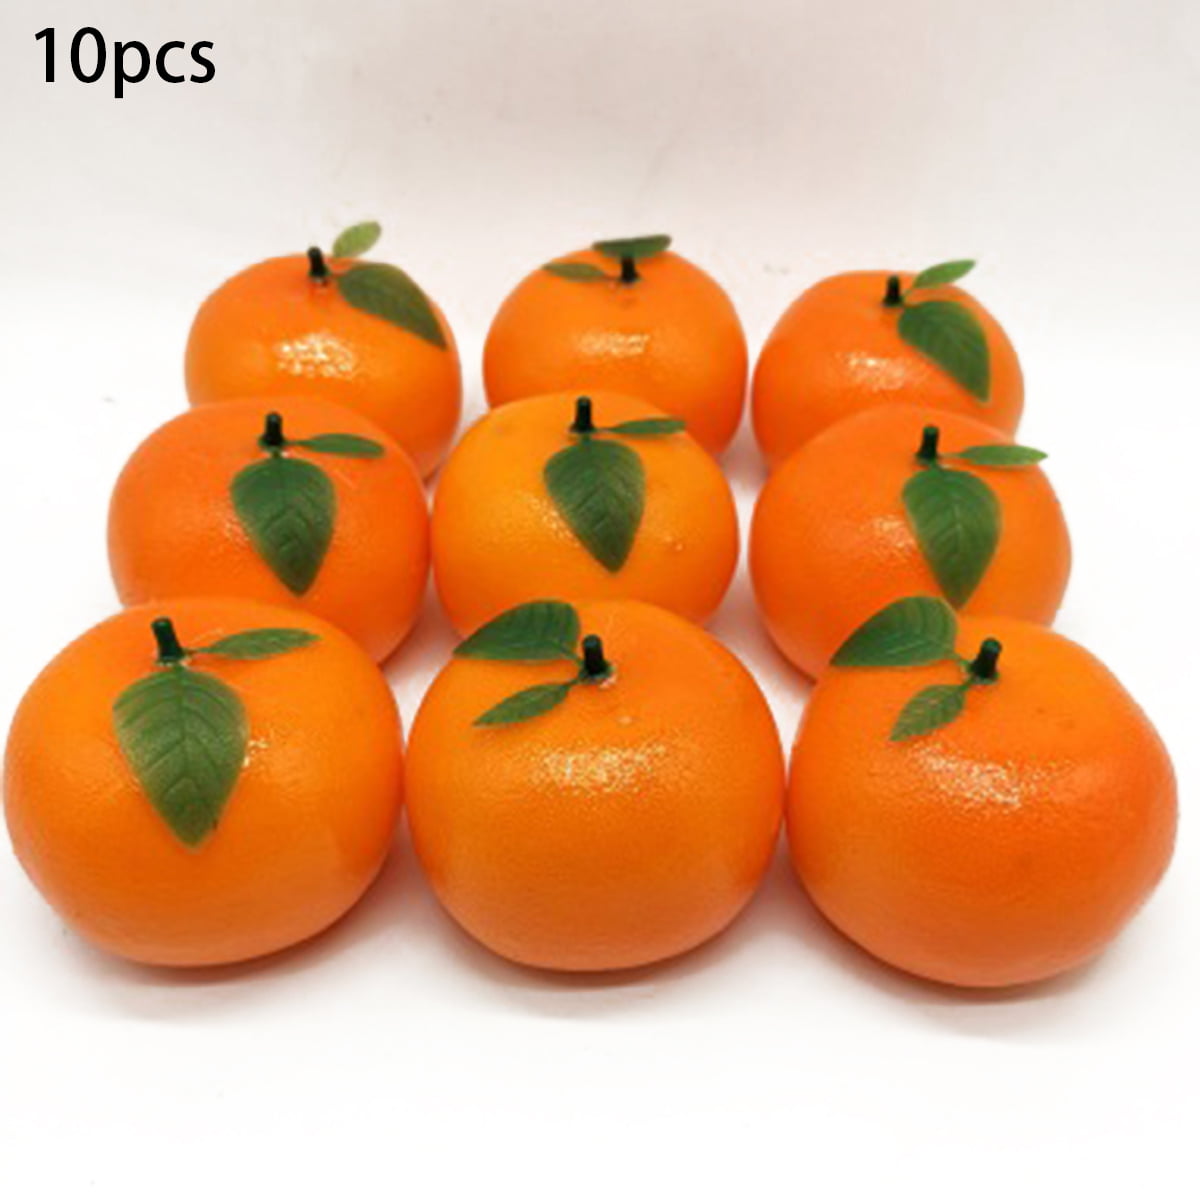 5 Pcs Artificial Mini Simulation Oranges for Home Party Kitchen Decoration Craft 